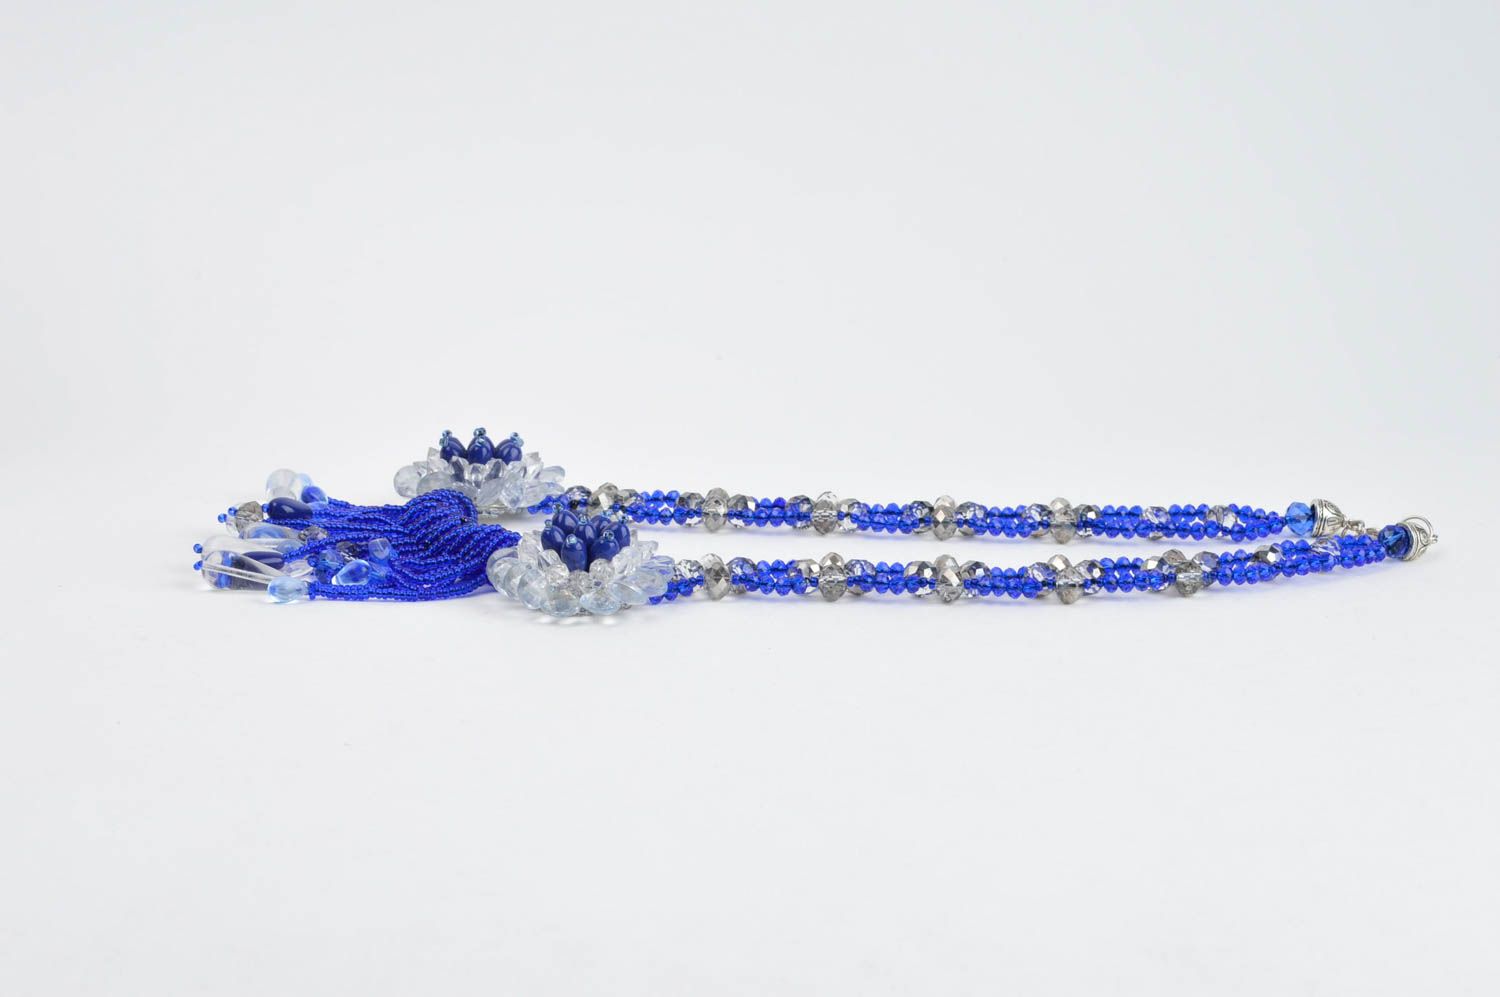 Handmade beads necklace handmade accessories jewelry of beads beads bijouterie photo 2